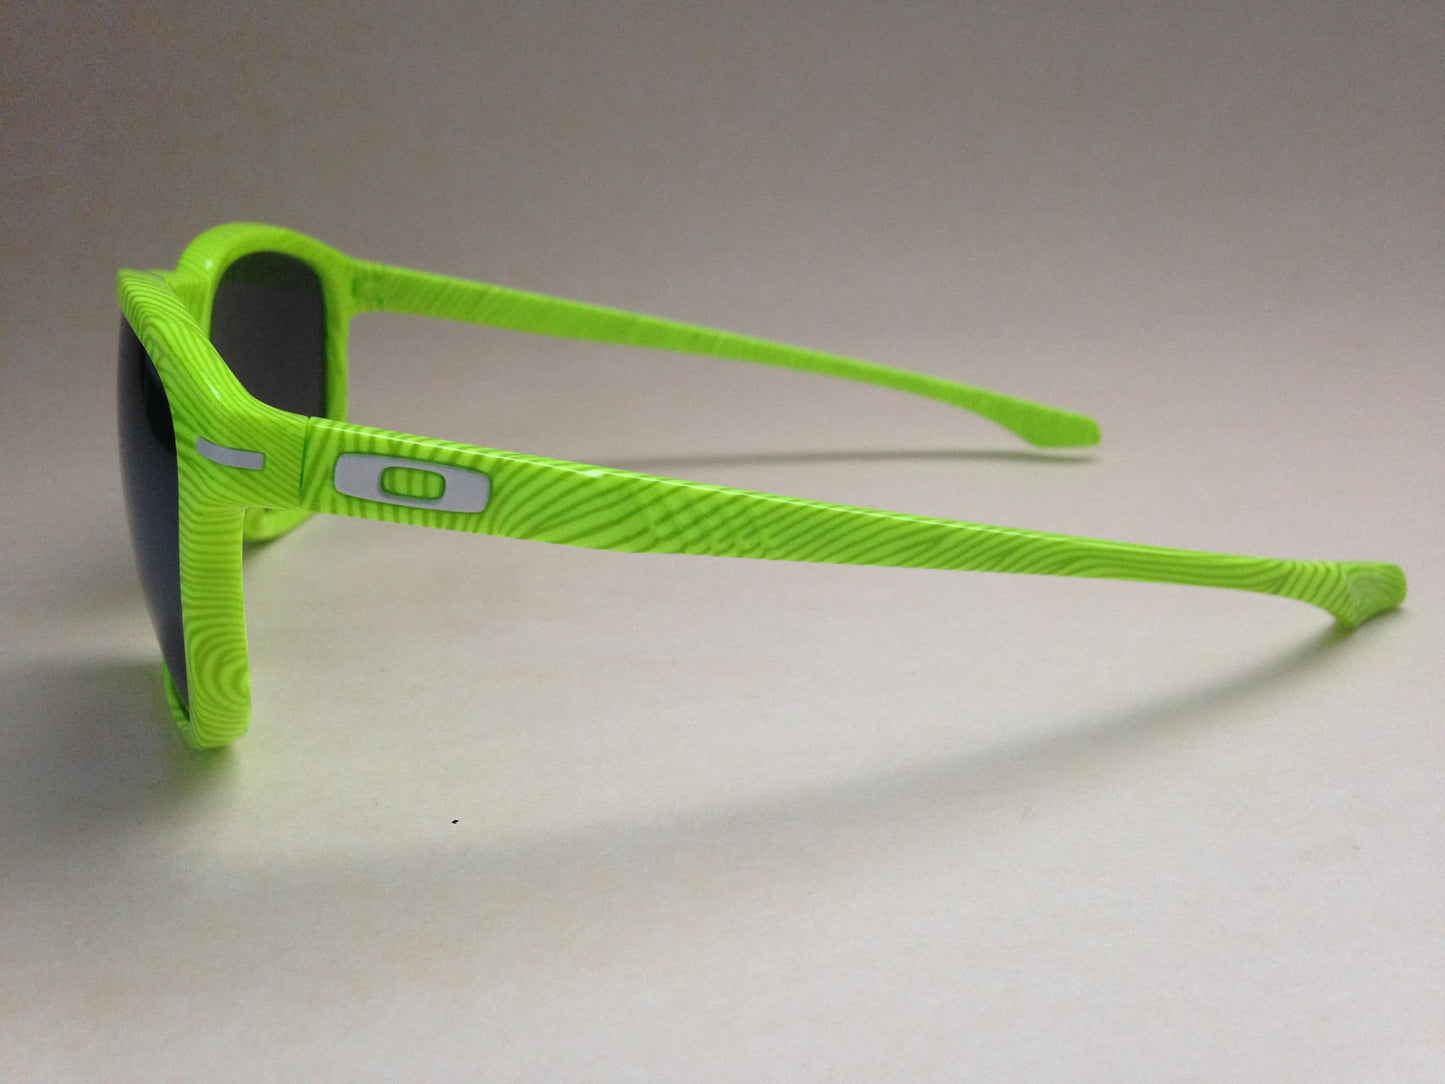 Oakley Enduro Oo9223-25 Sport Sunglasses Fingerprint Green Jade Iridium Mirror Lens - Sunglasses